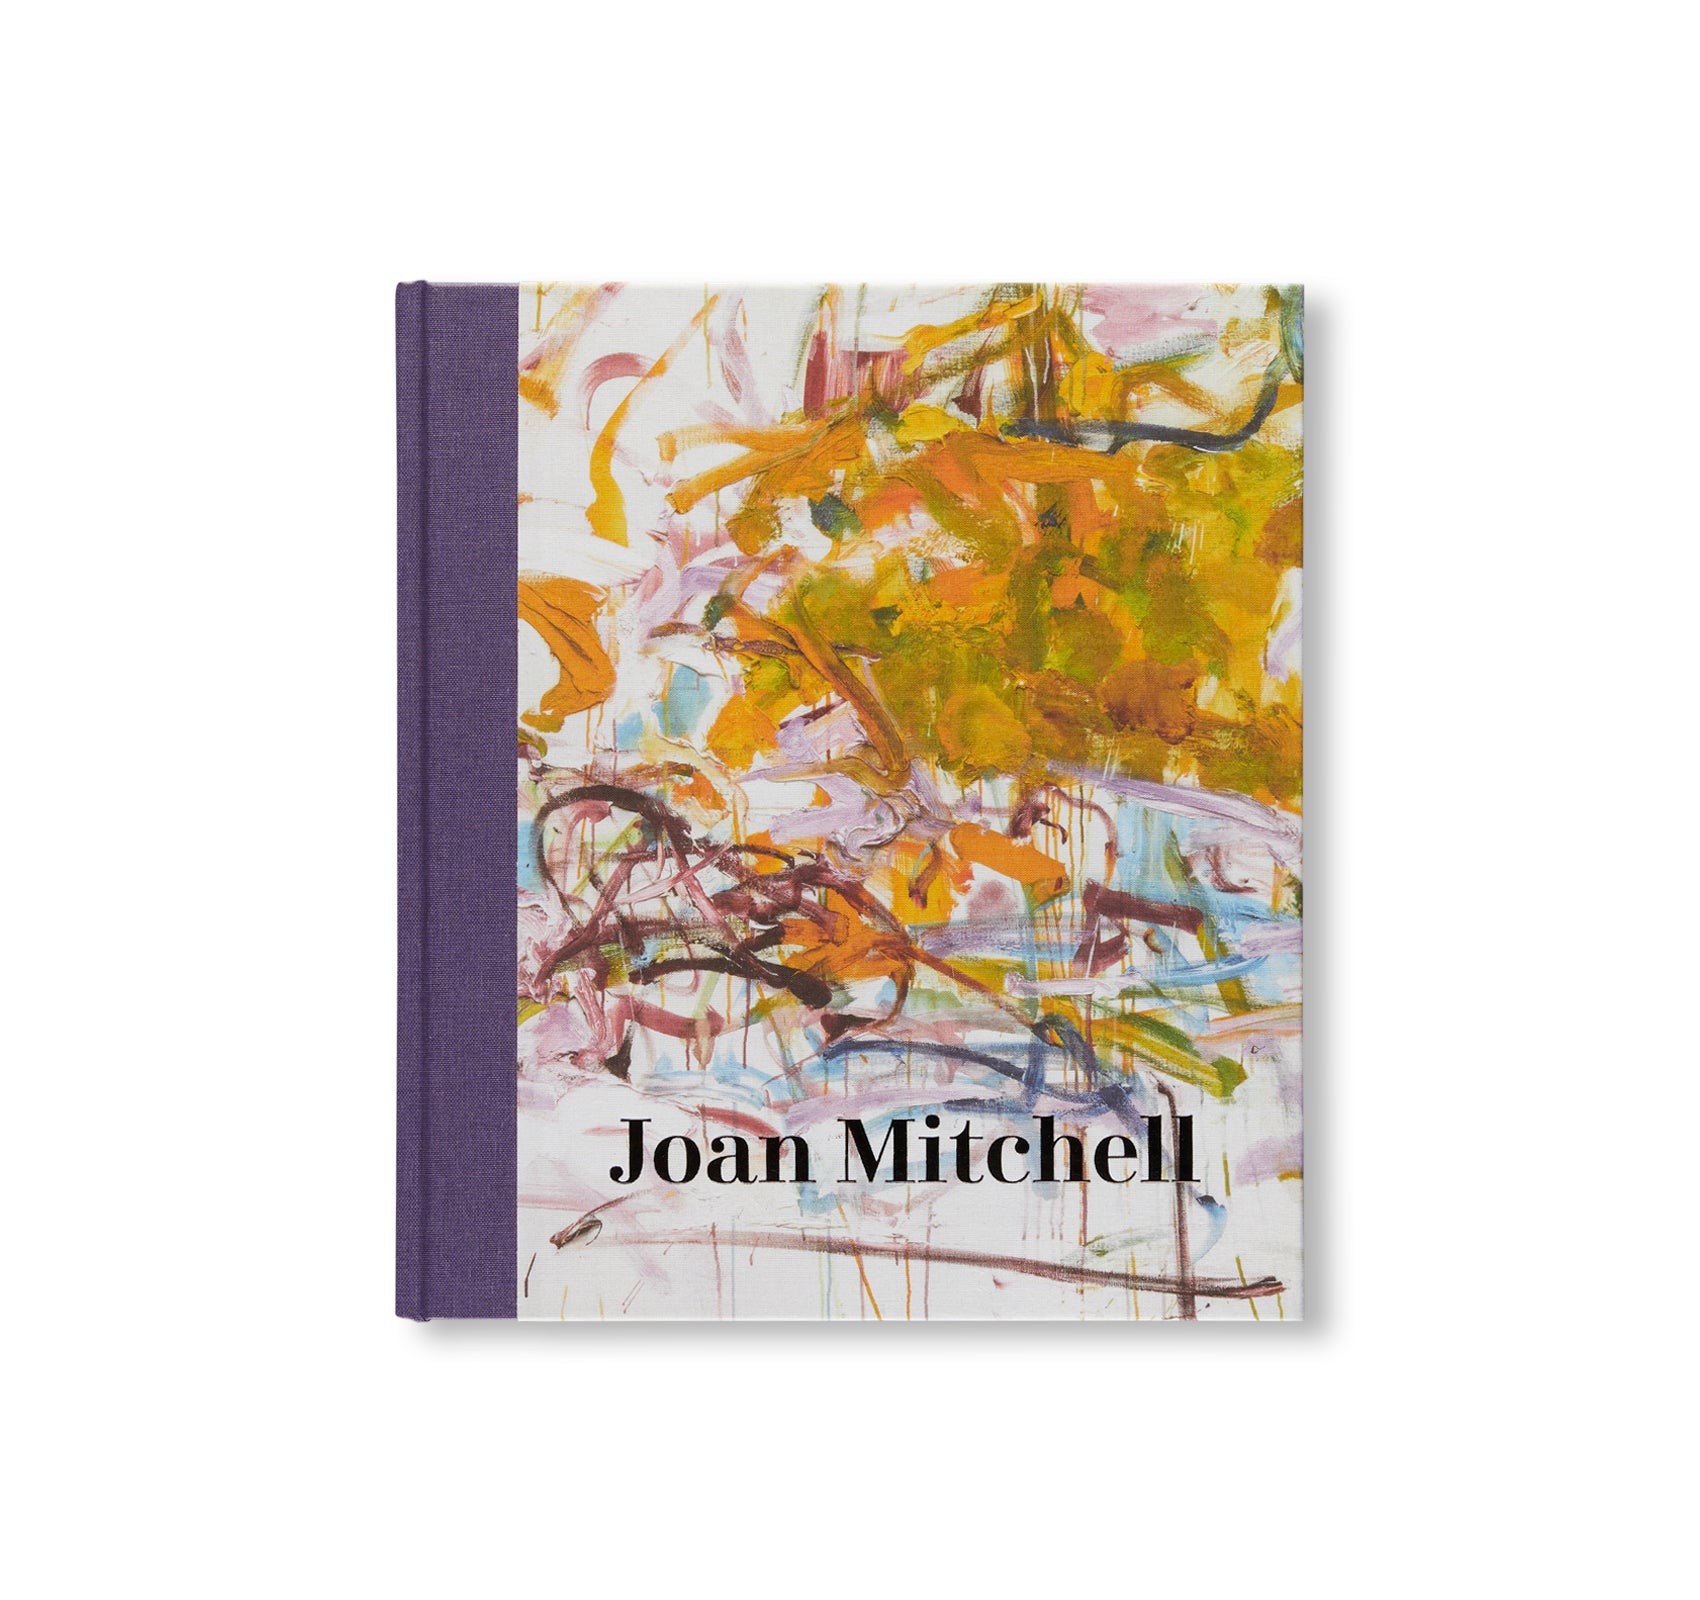 JOAN MITCHELL by Joan Mitchell